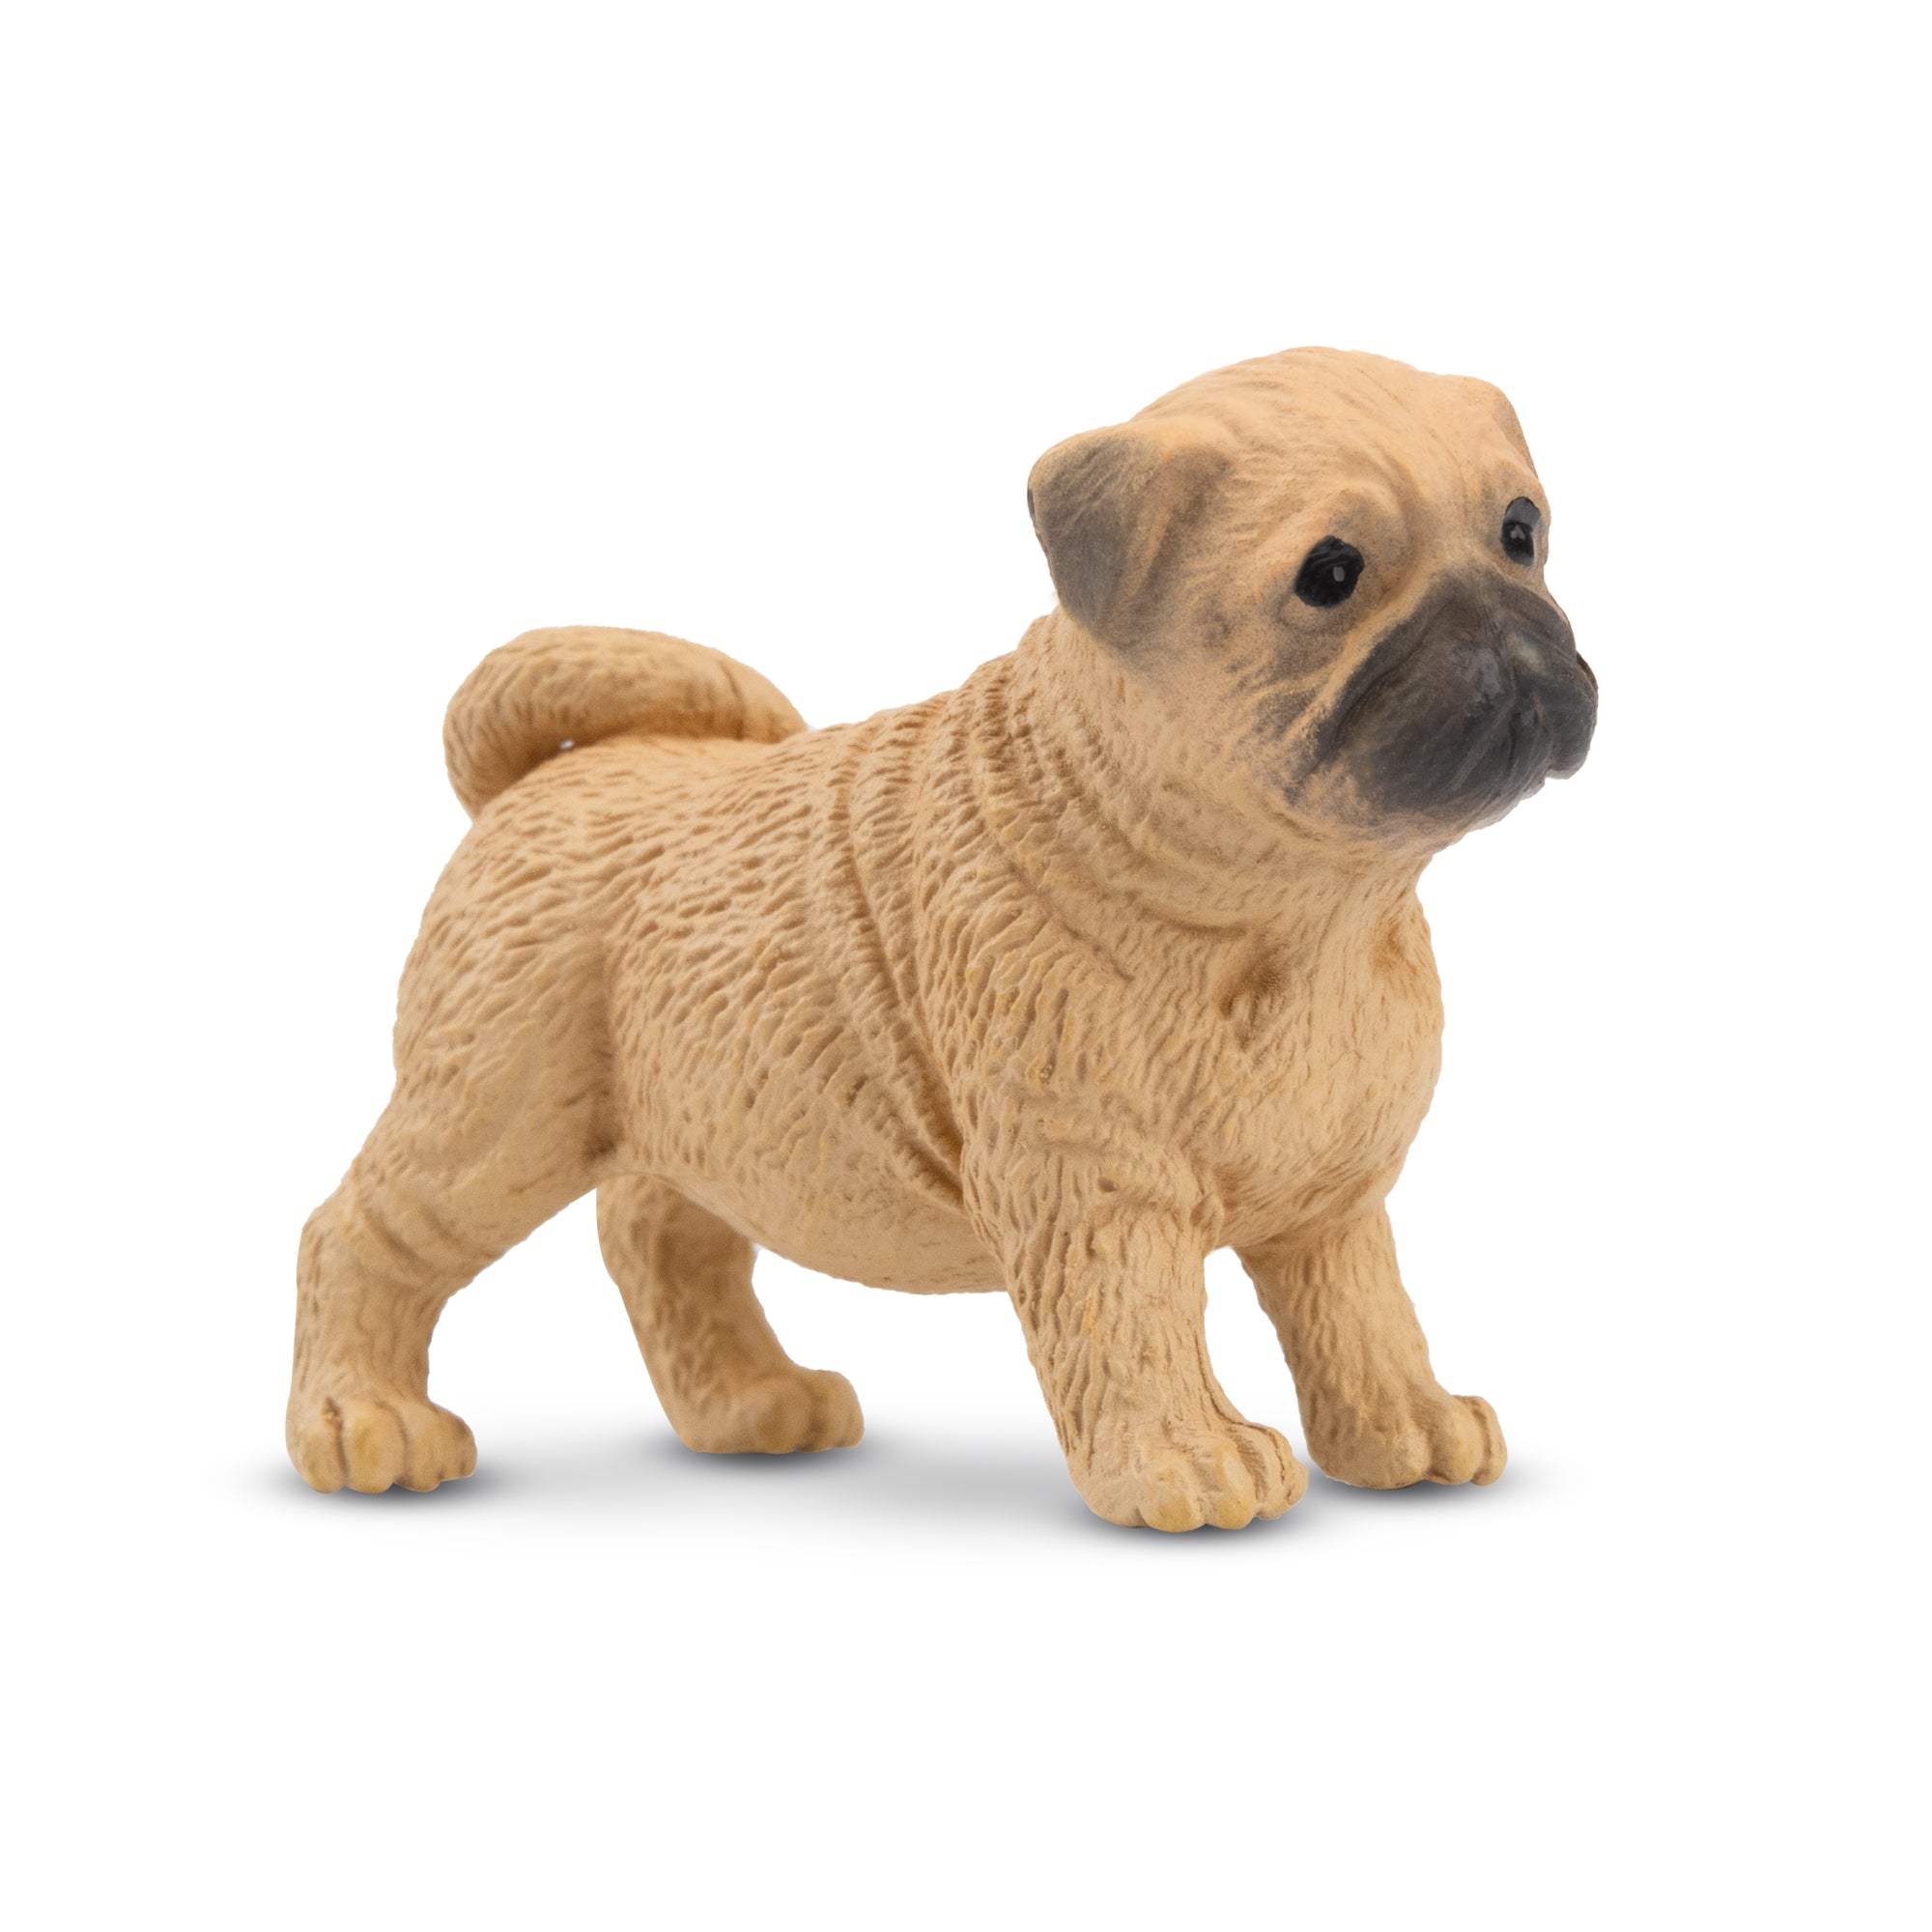 Toymany Mini Standing Pug Puppy Figurine Toy